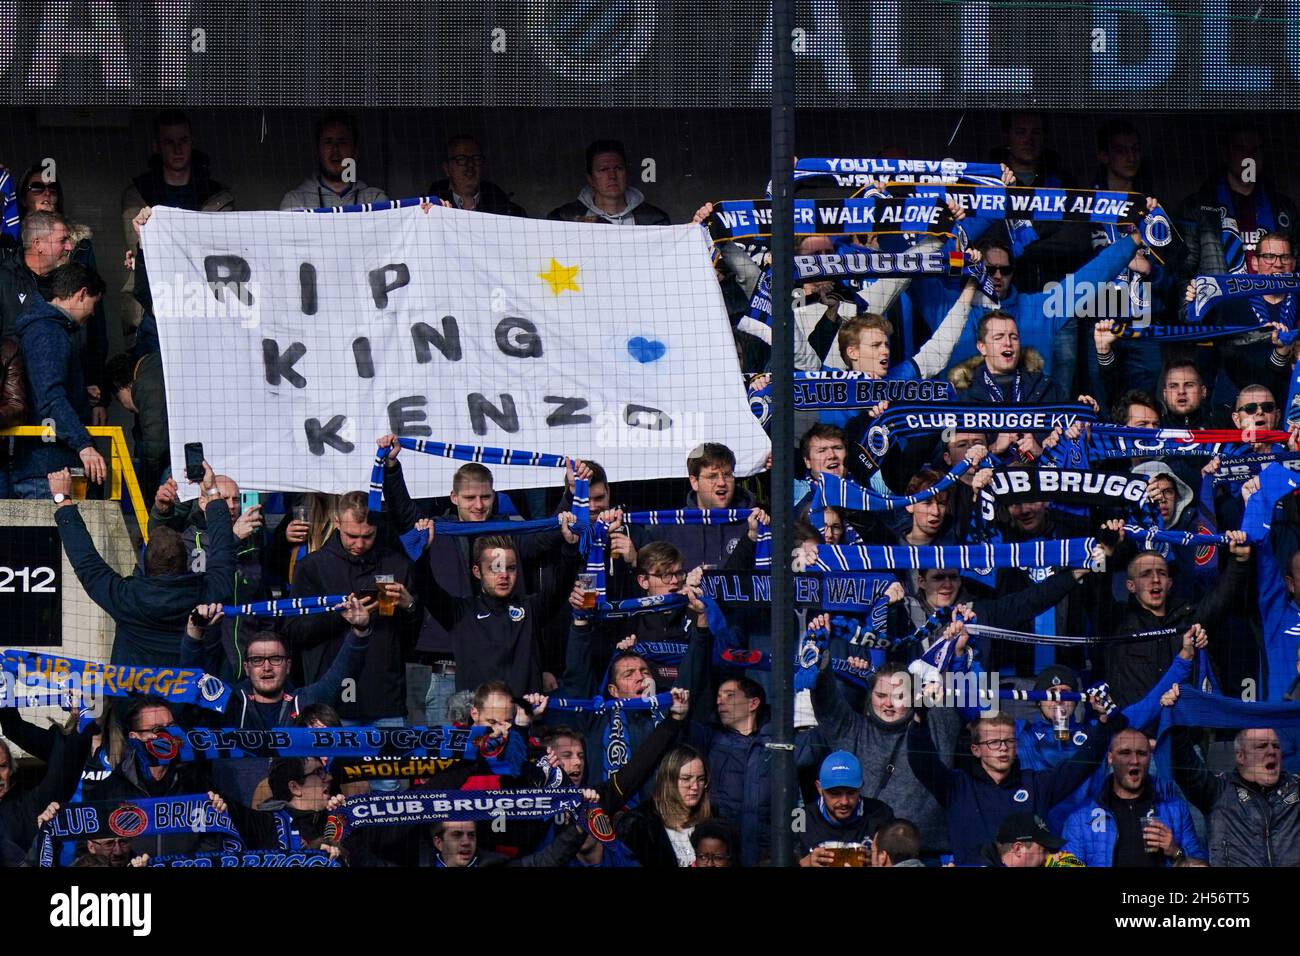 Club Brugge KV on X: Fans on point. 🥰 #CLUKVK